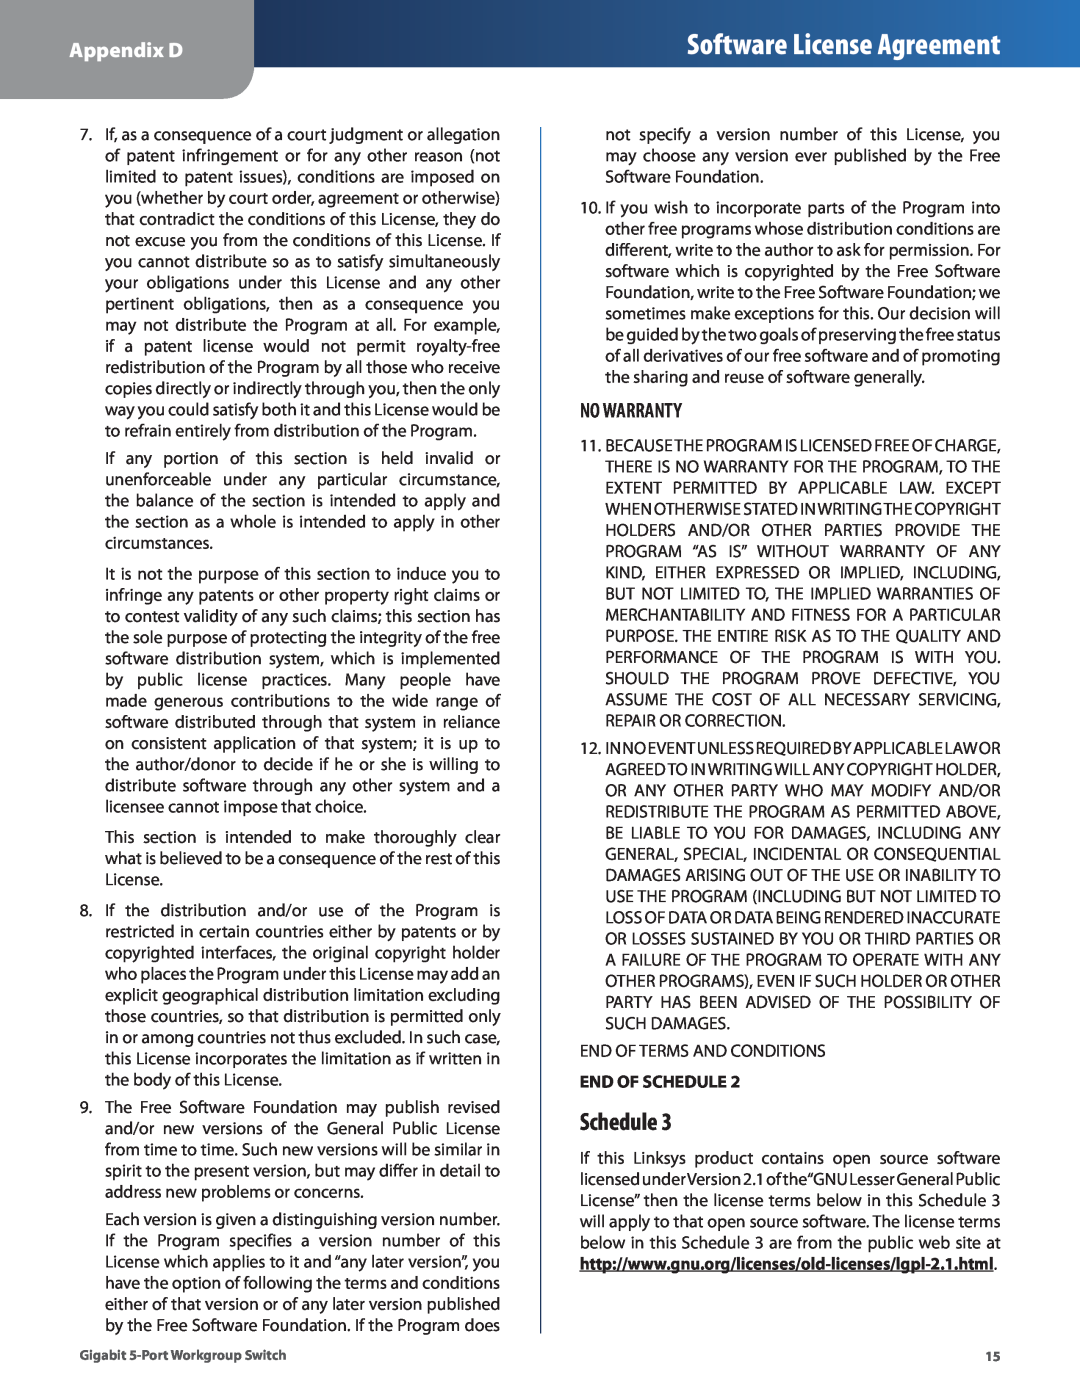 Cisco Systems EG005W manual No Warranty, Software License Agreement, Schedule, Appendix D 